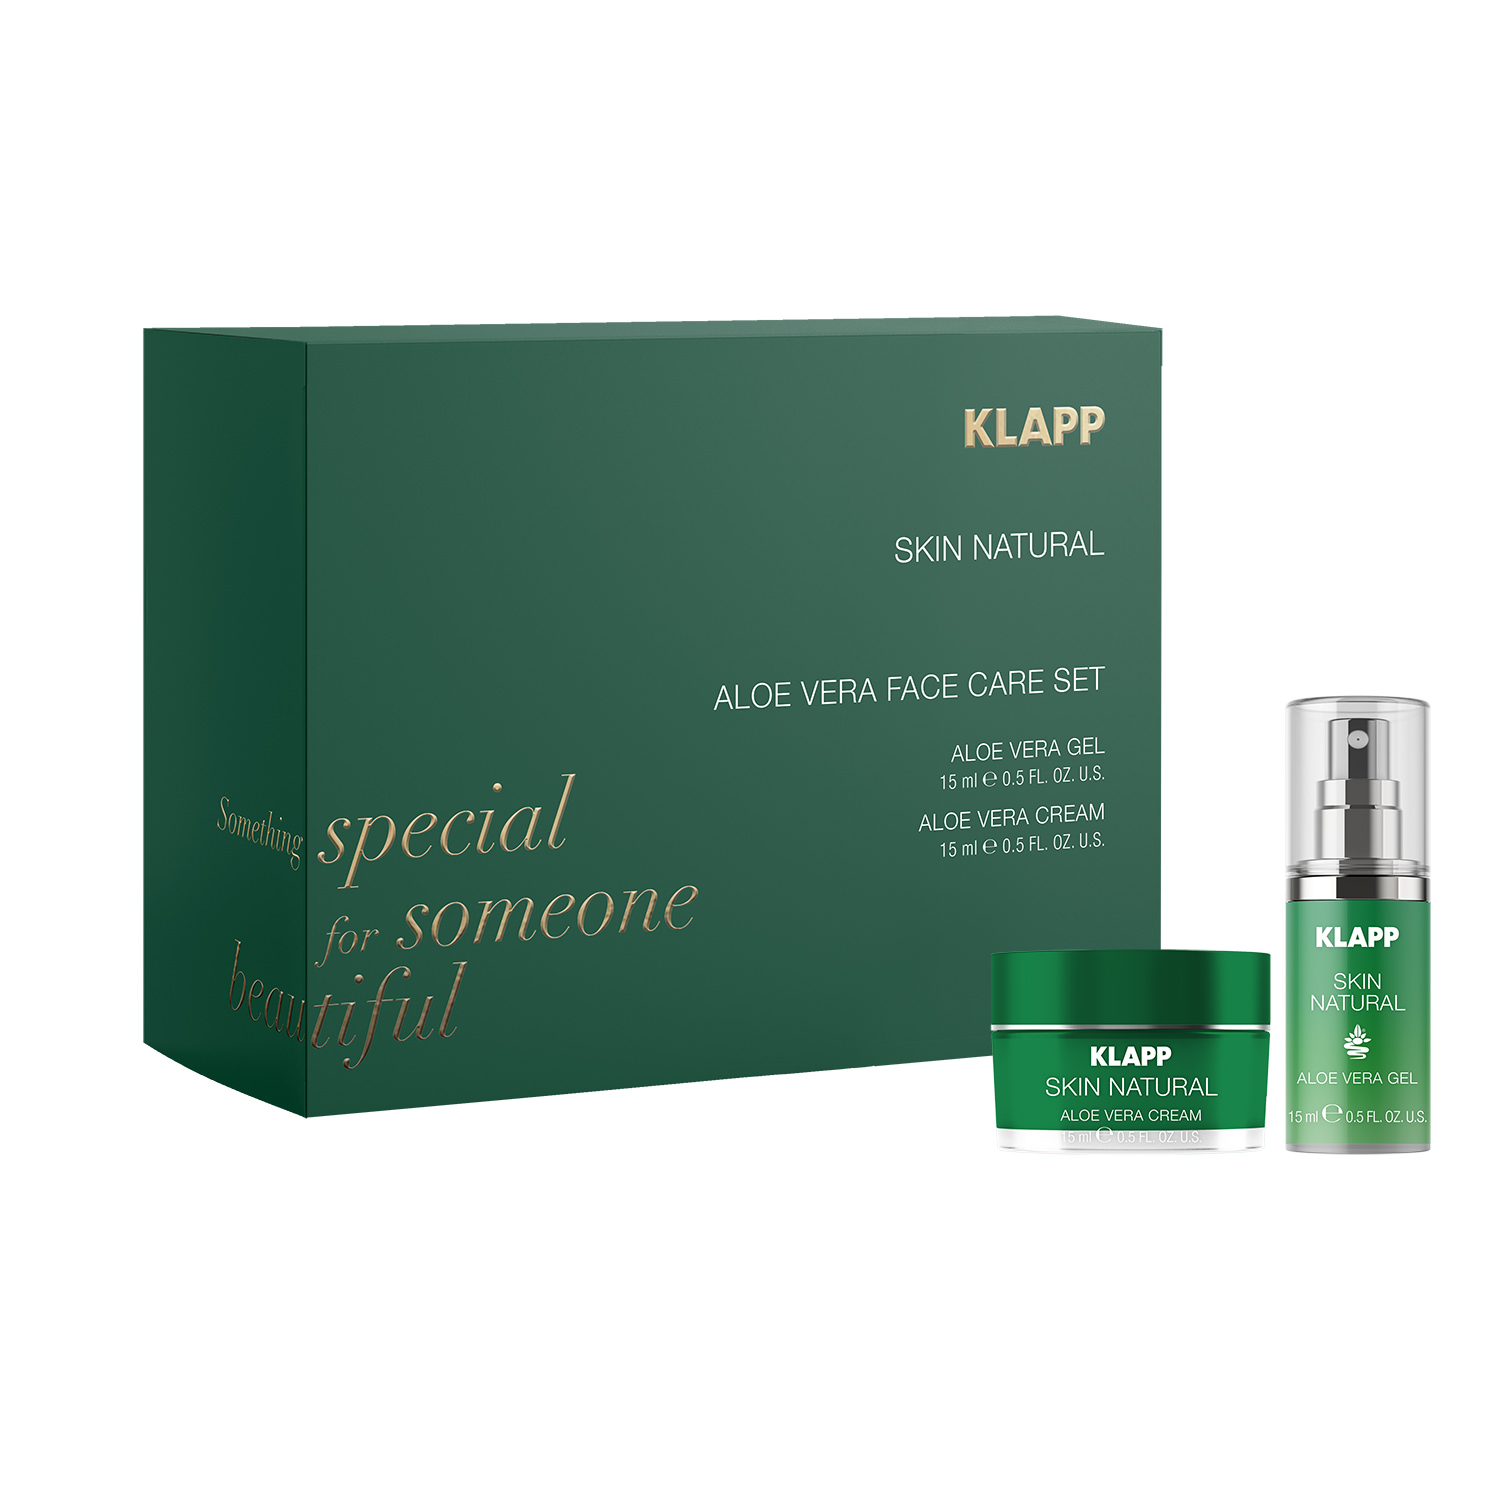 Klapp Skin Natural Aloe Vera Face Care Set - 2021